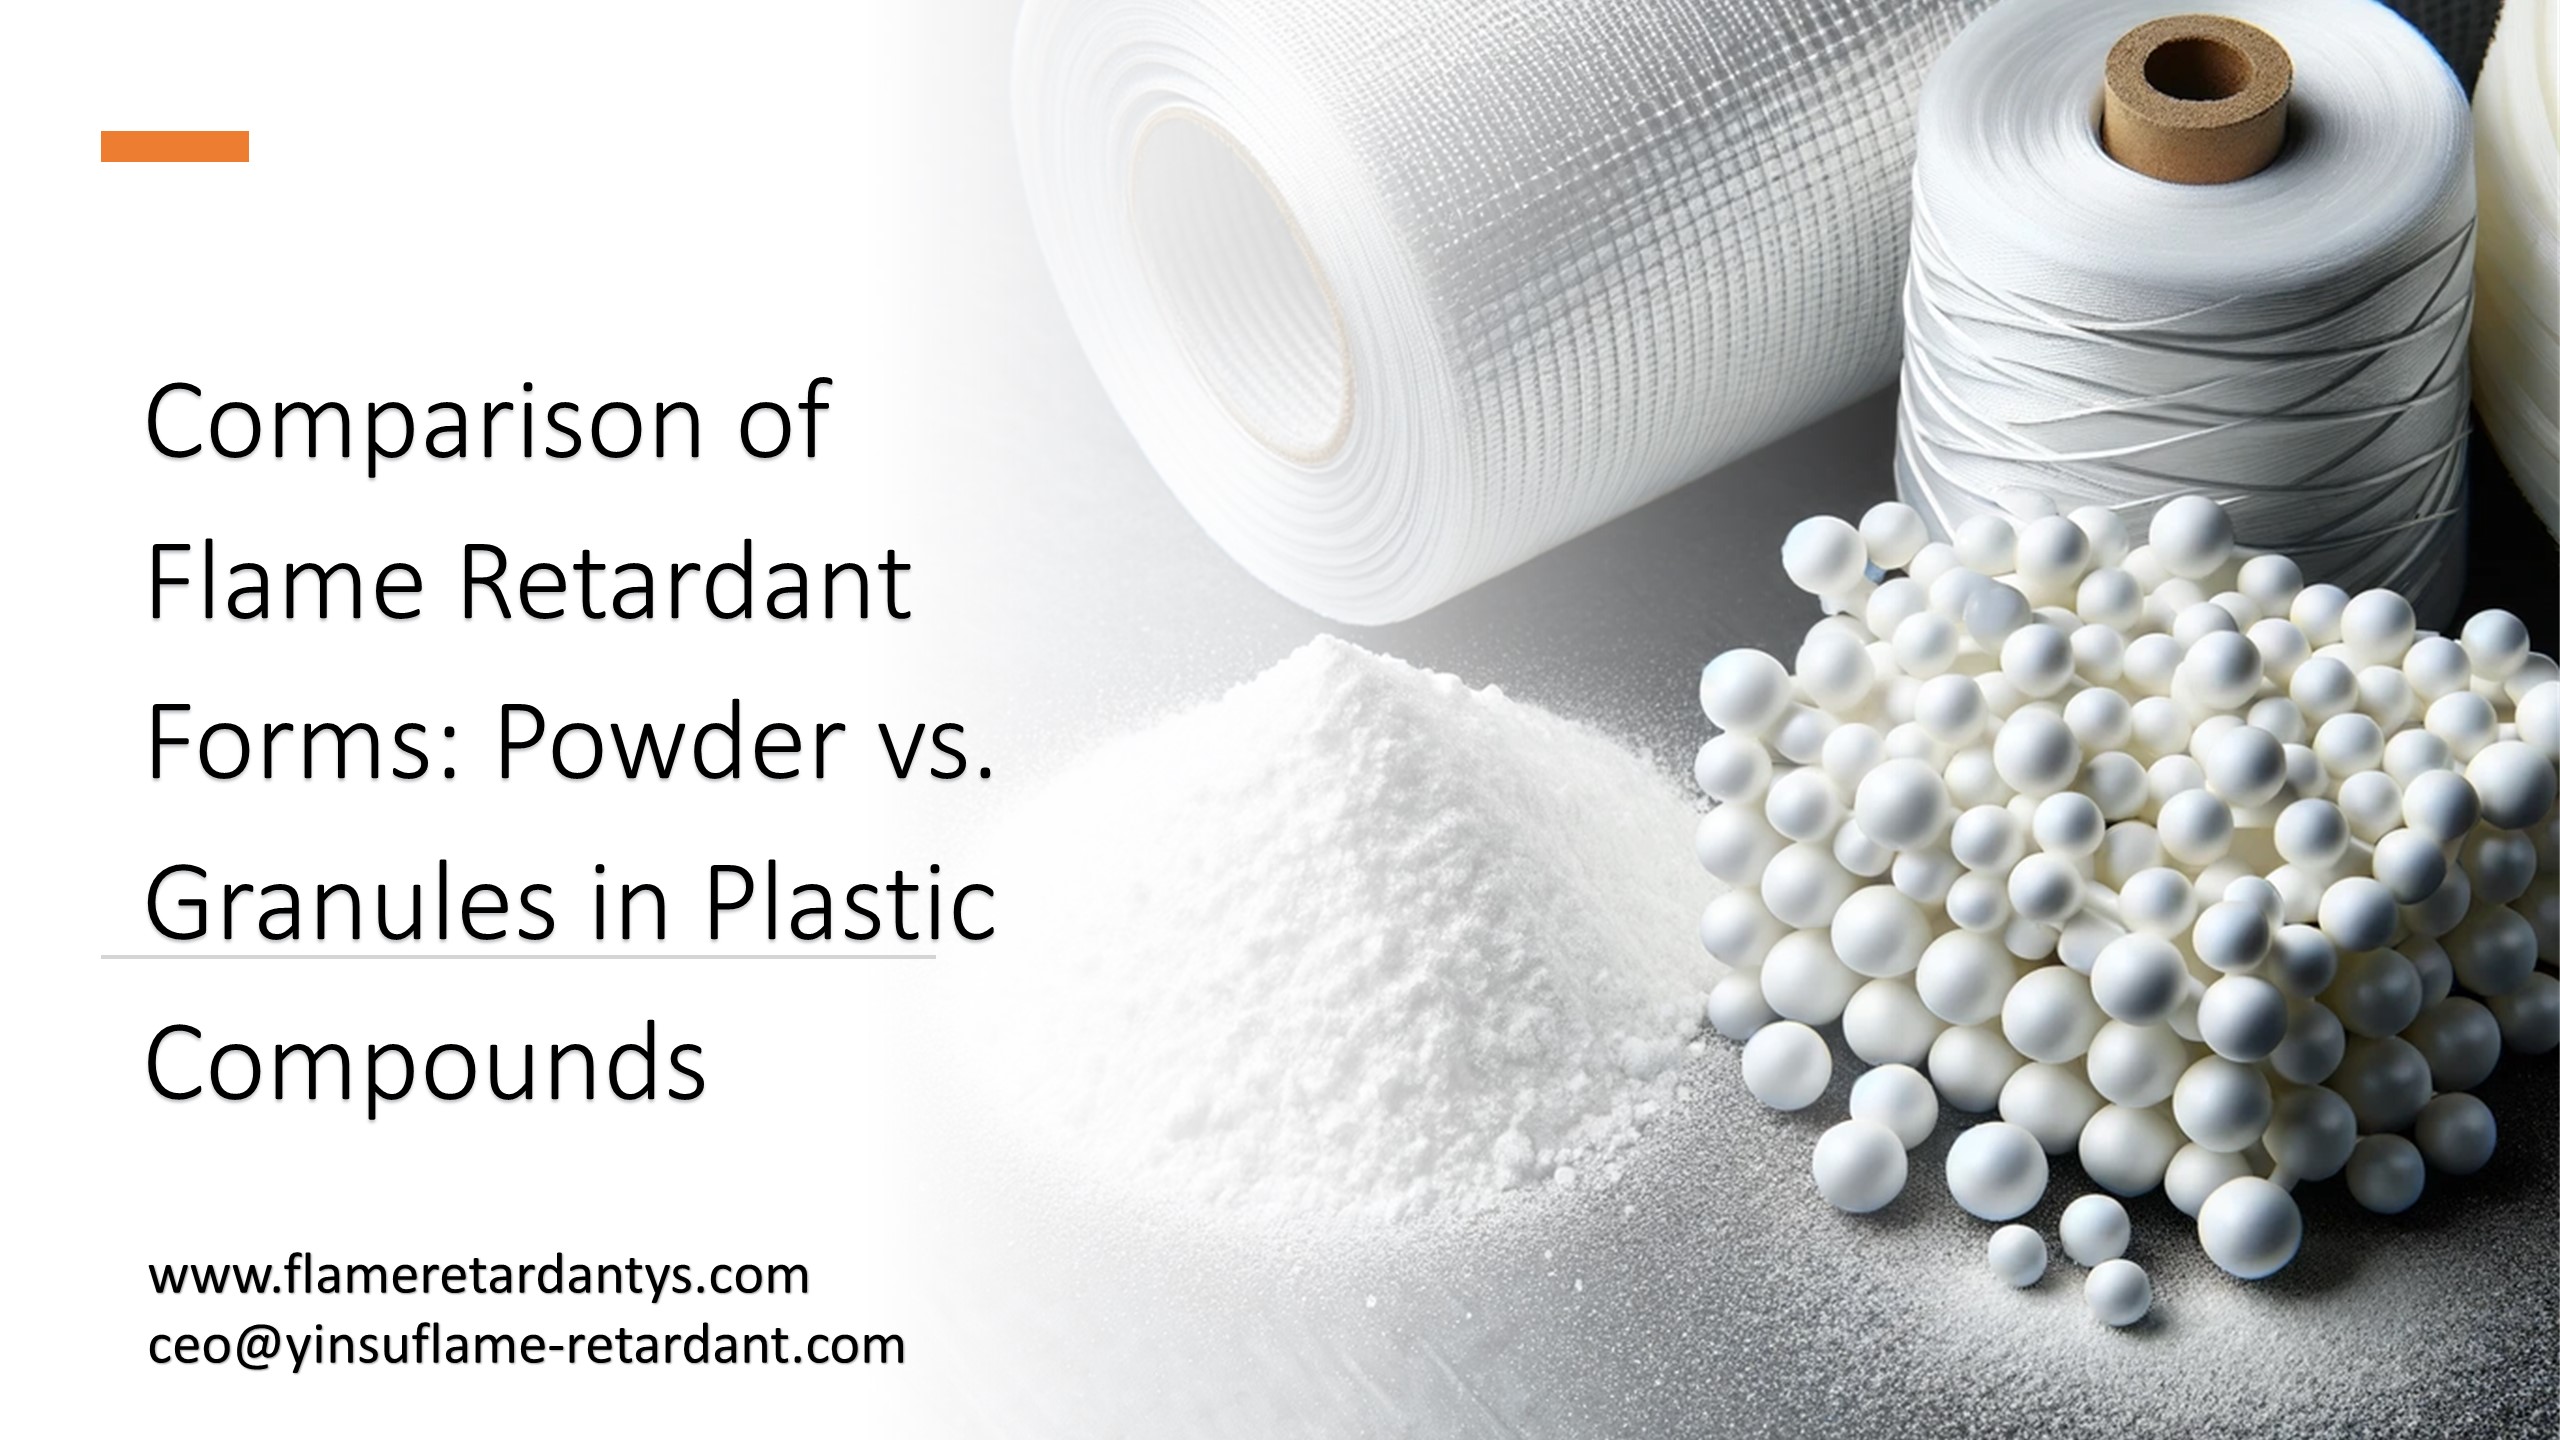 Comparison of Flame Retardant Forms Powder vs. Granules in Plastic Compounds